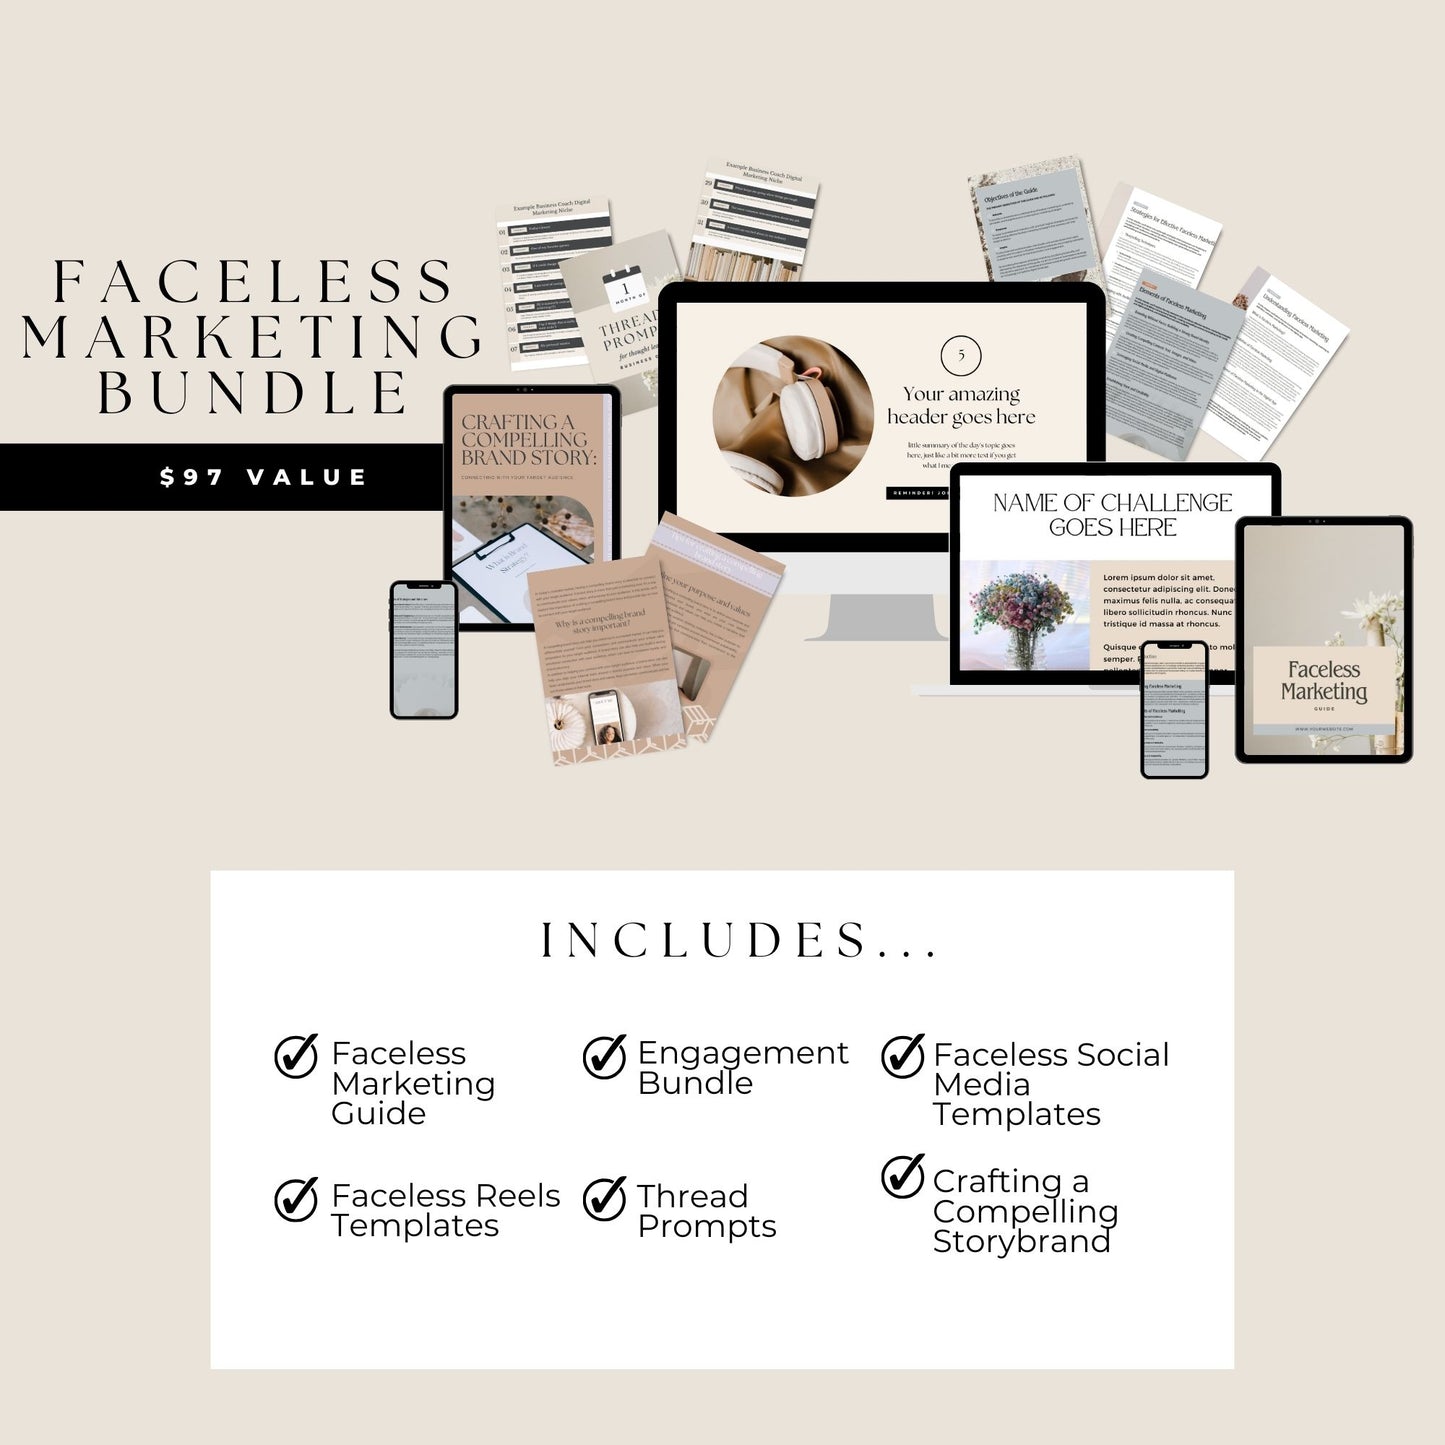 Faceless Marketing Bundle